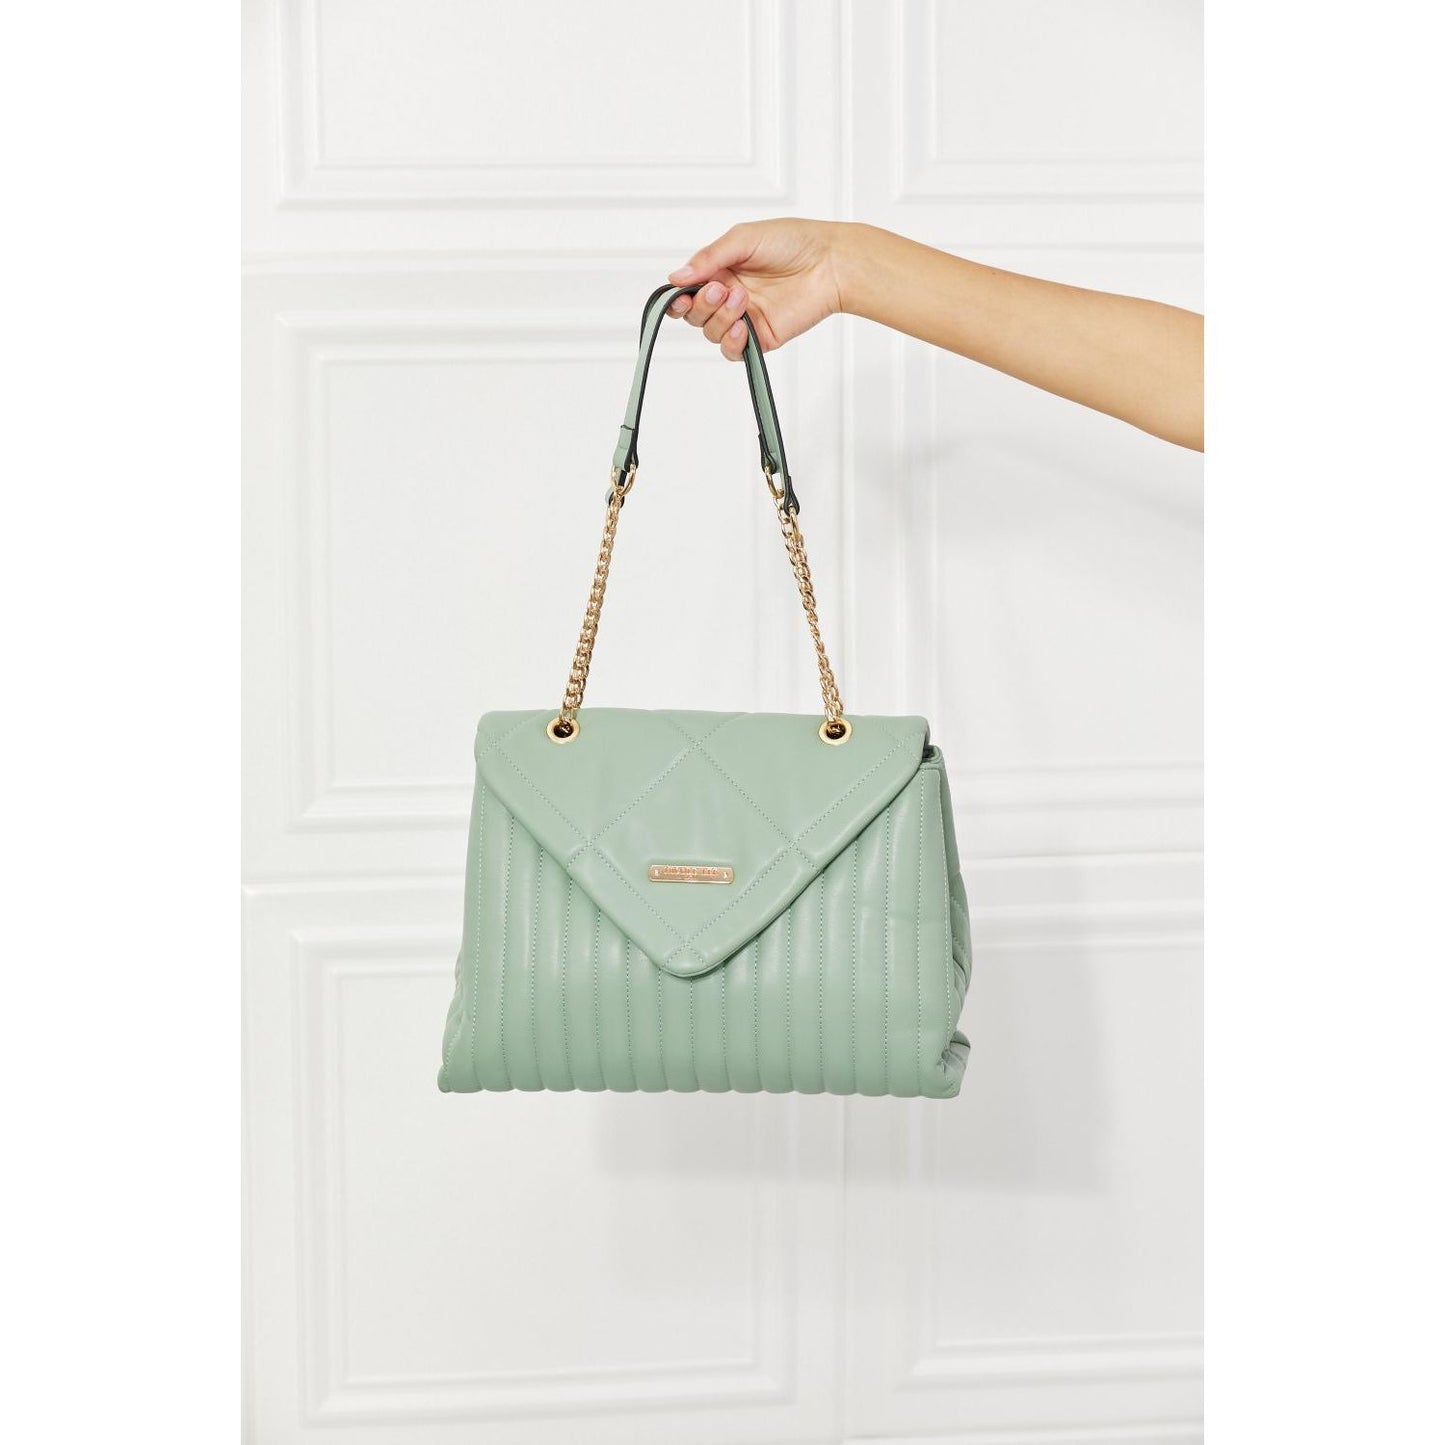 Nicole Lee USA A Nice Touch Handbag - TiffanyzKlozet